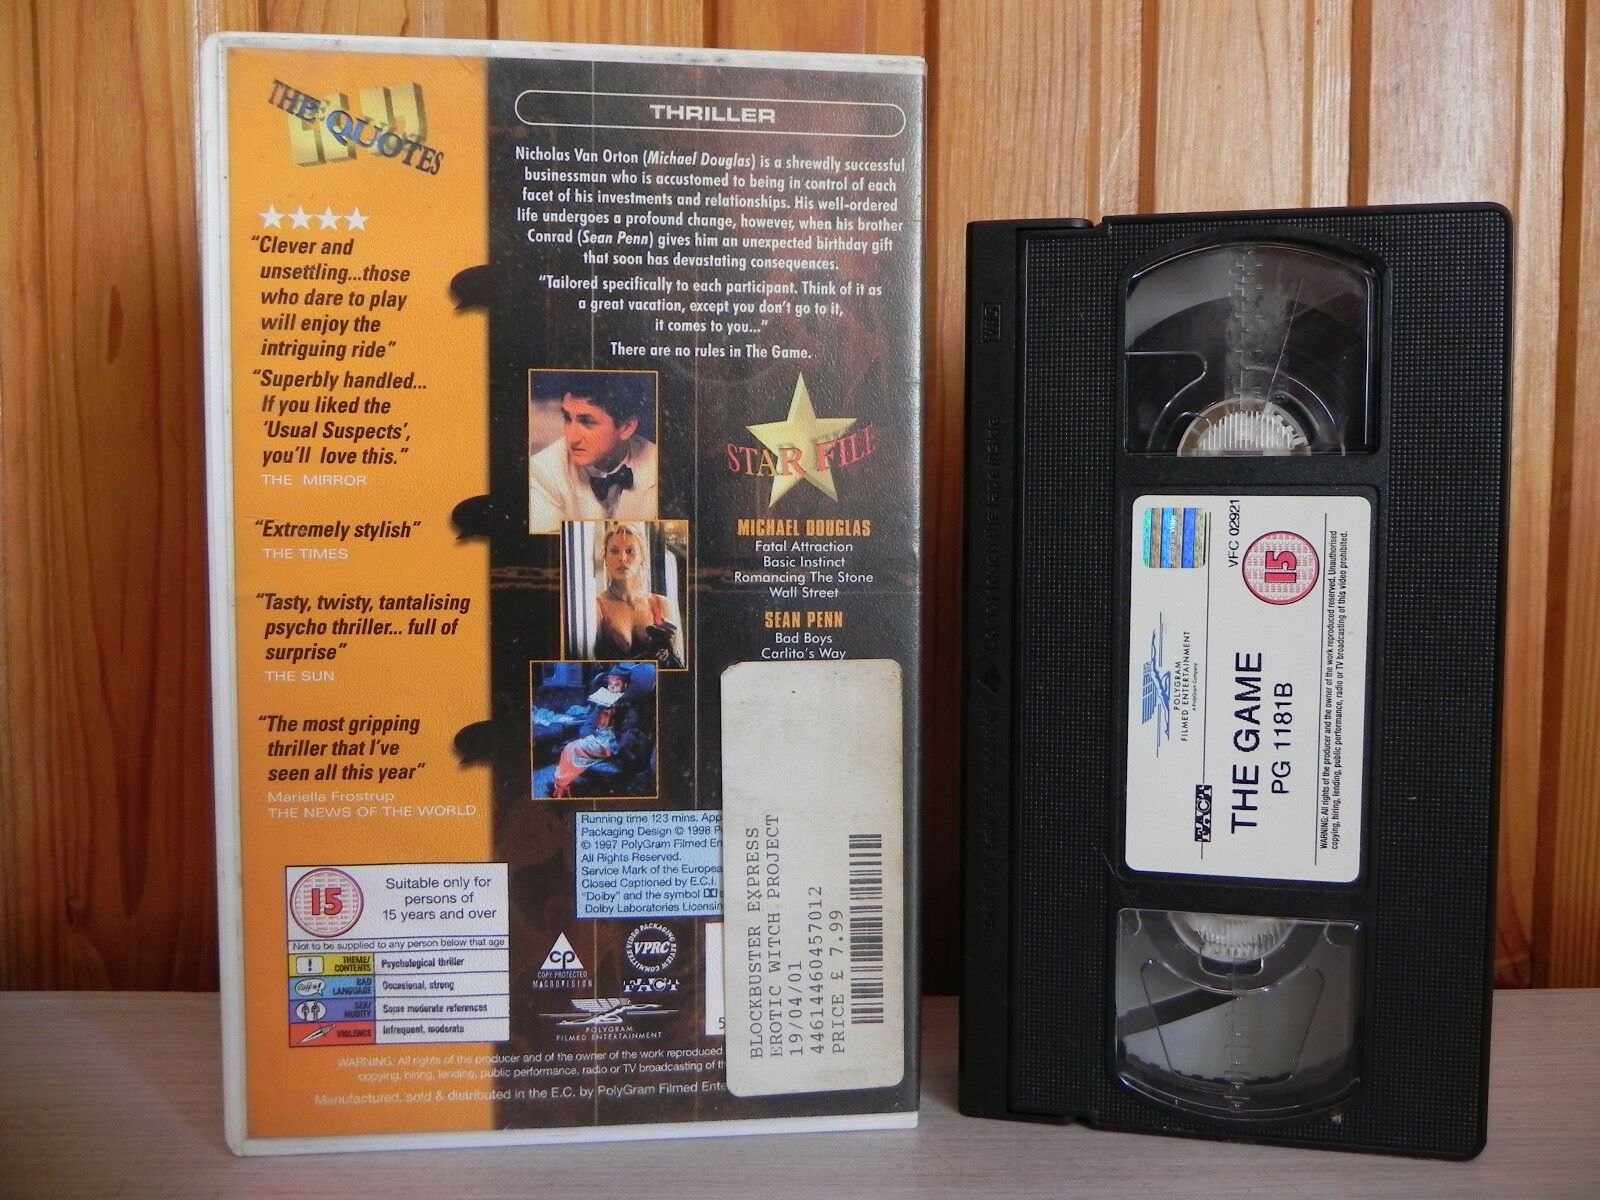 The Game - Michael Douglas - Big-Box - Ex-Rental - Psycho-Thriller - Pal VHS-